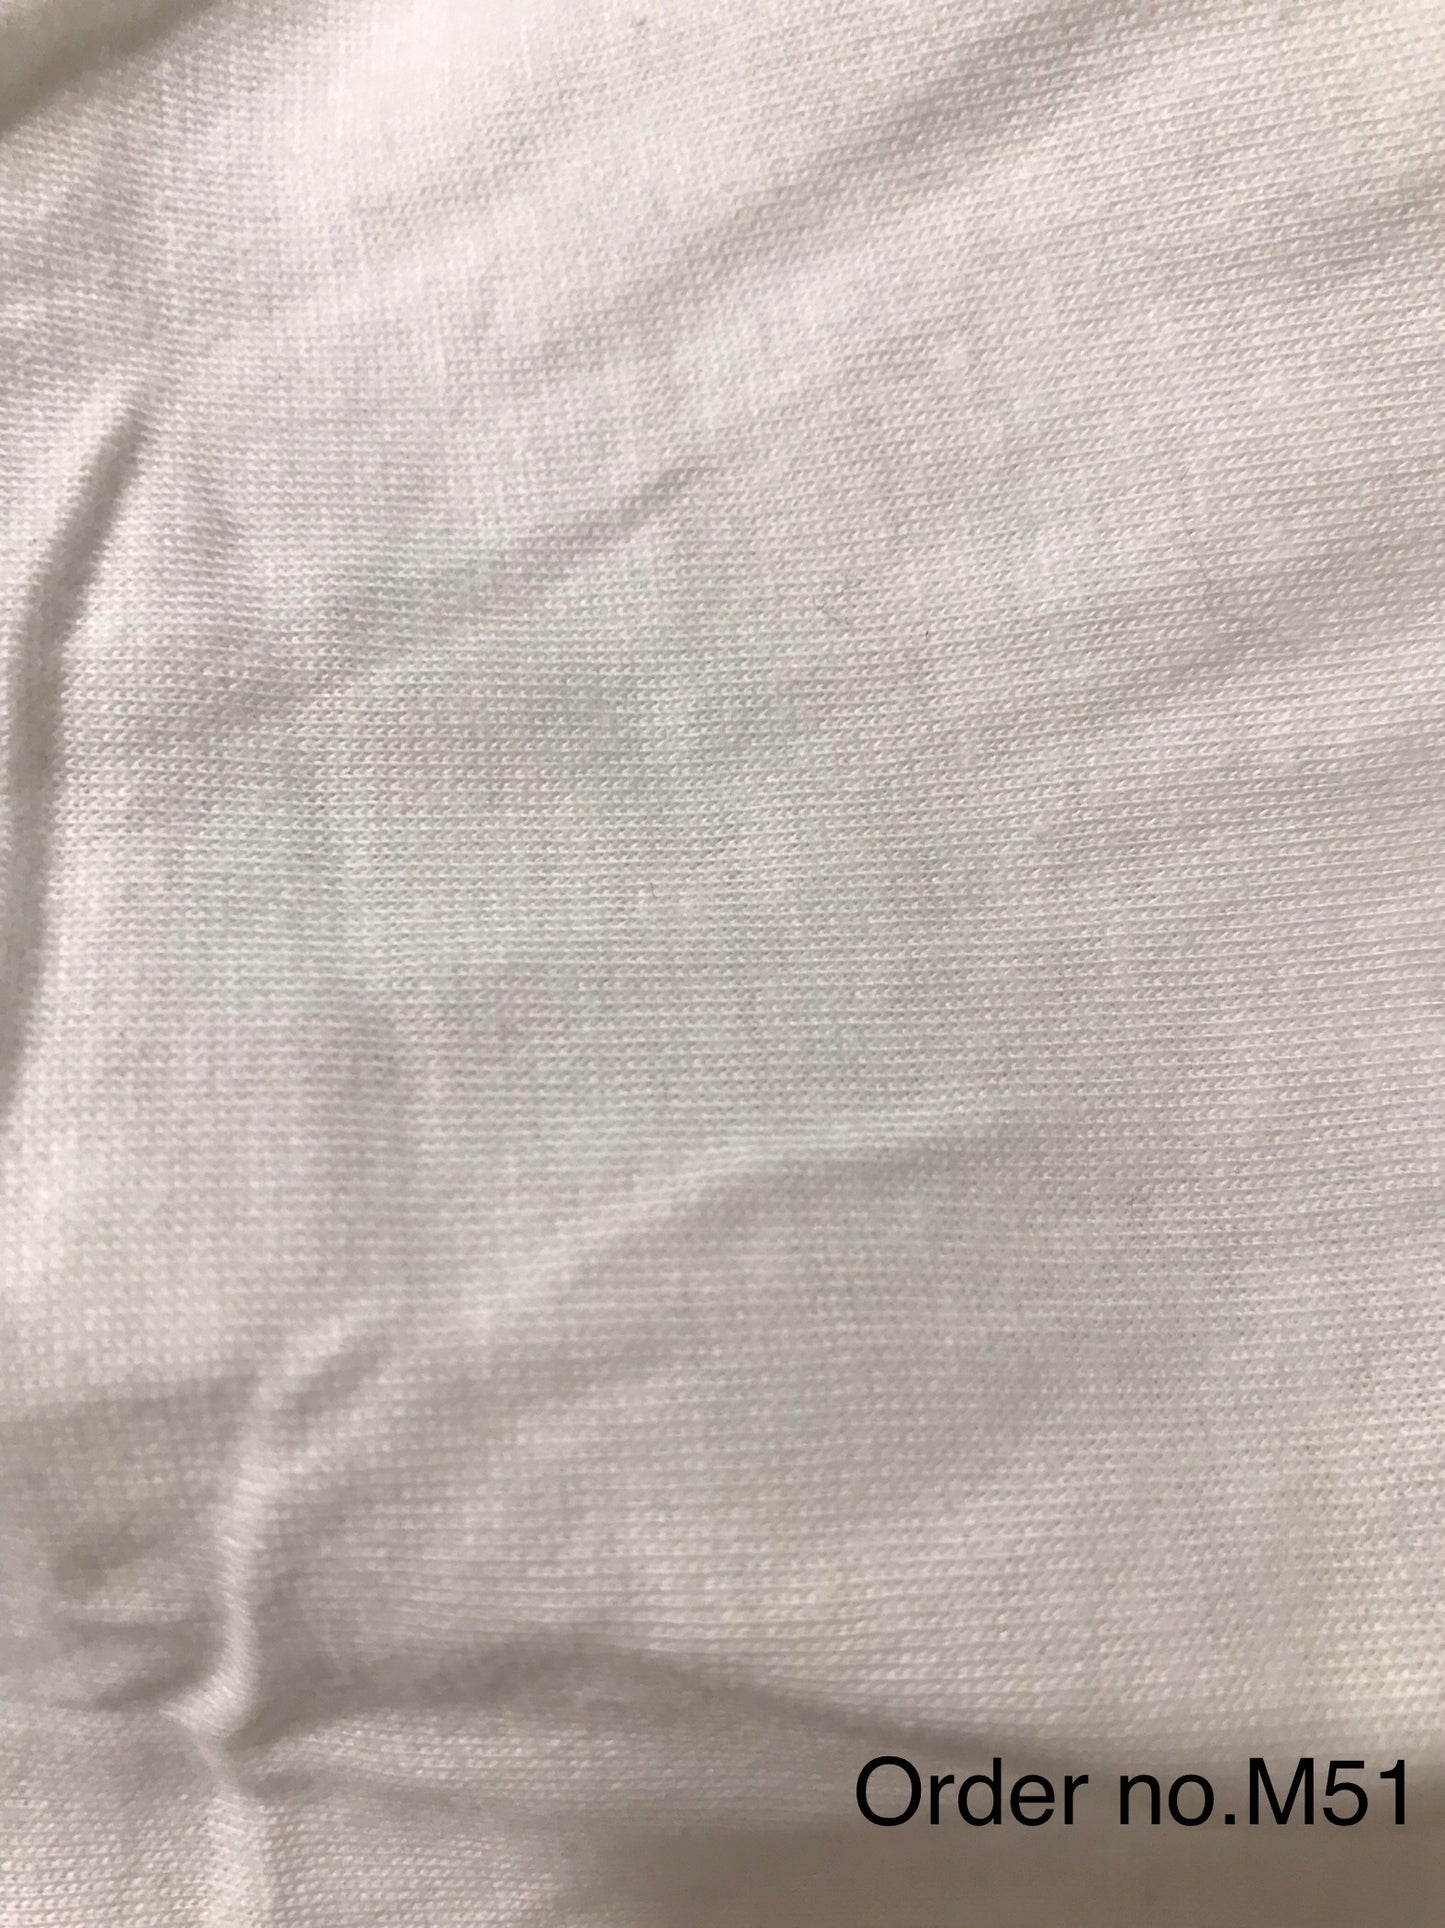 Organic cotton jersey 250gm width 62”